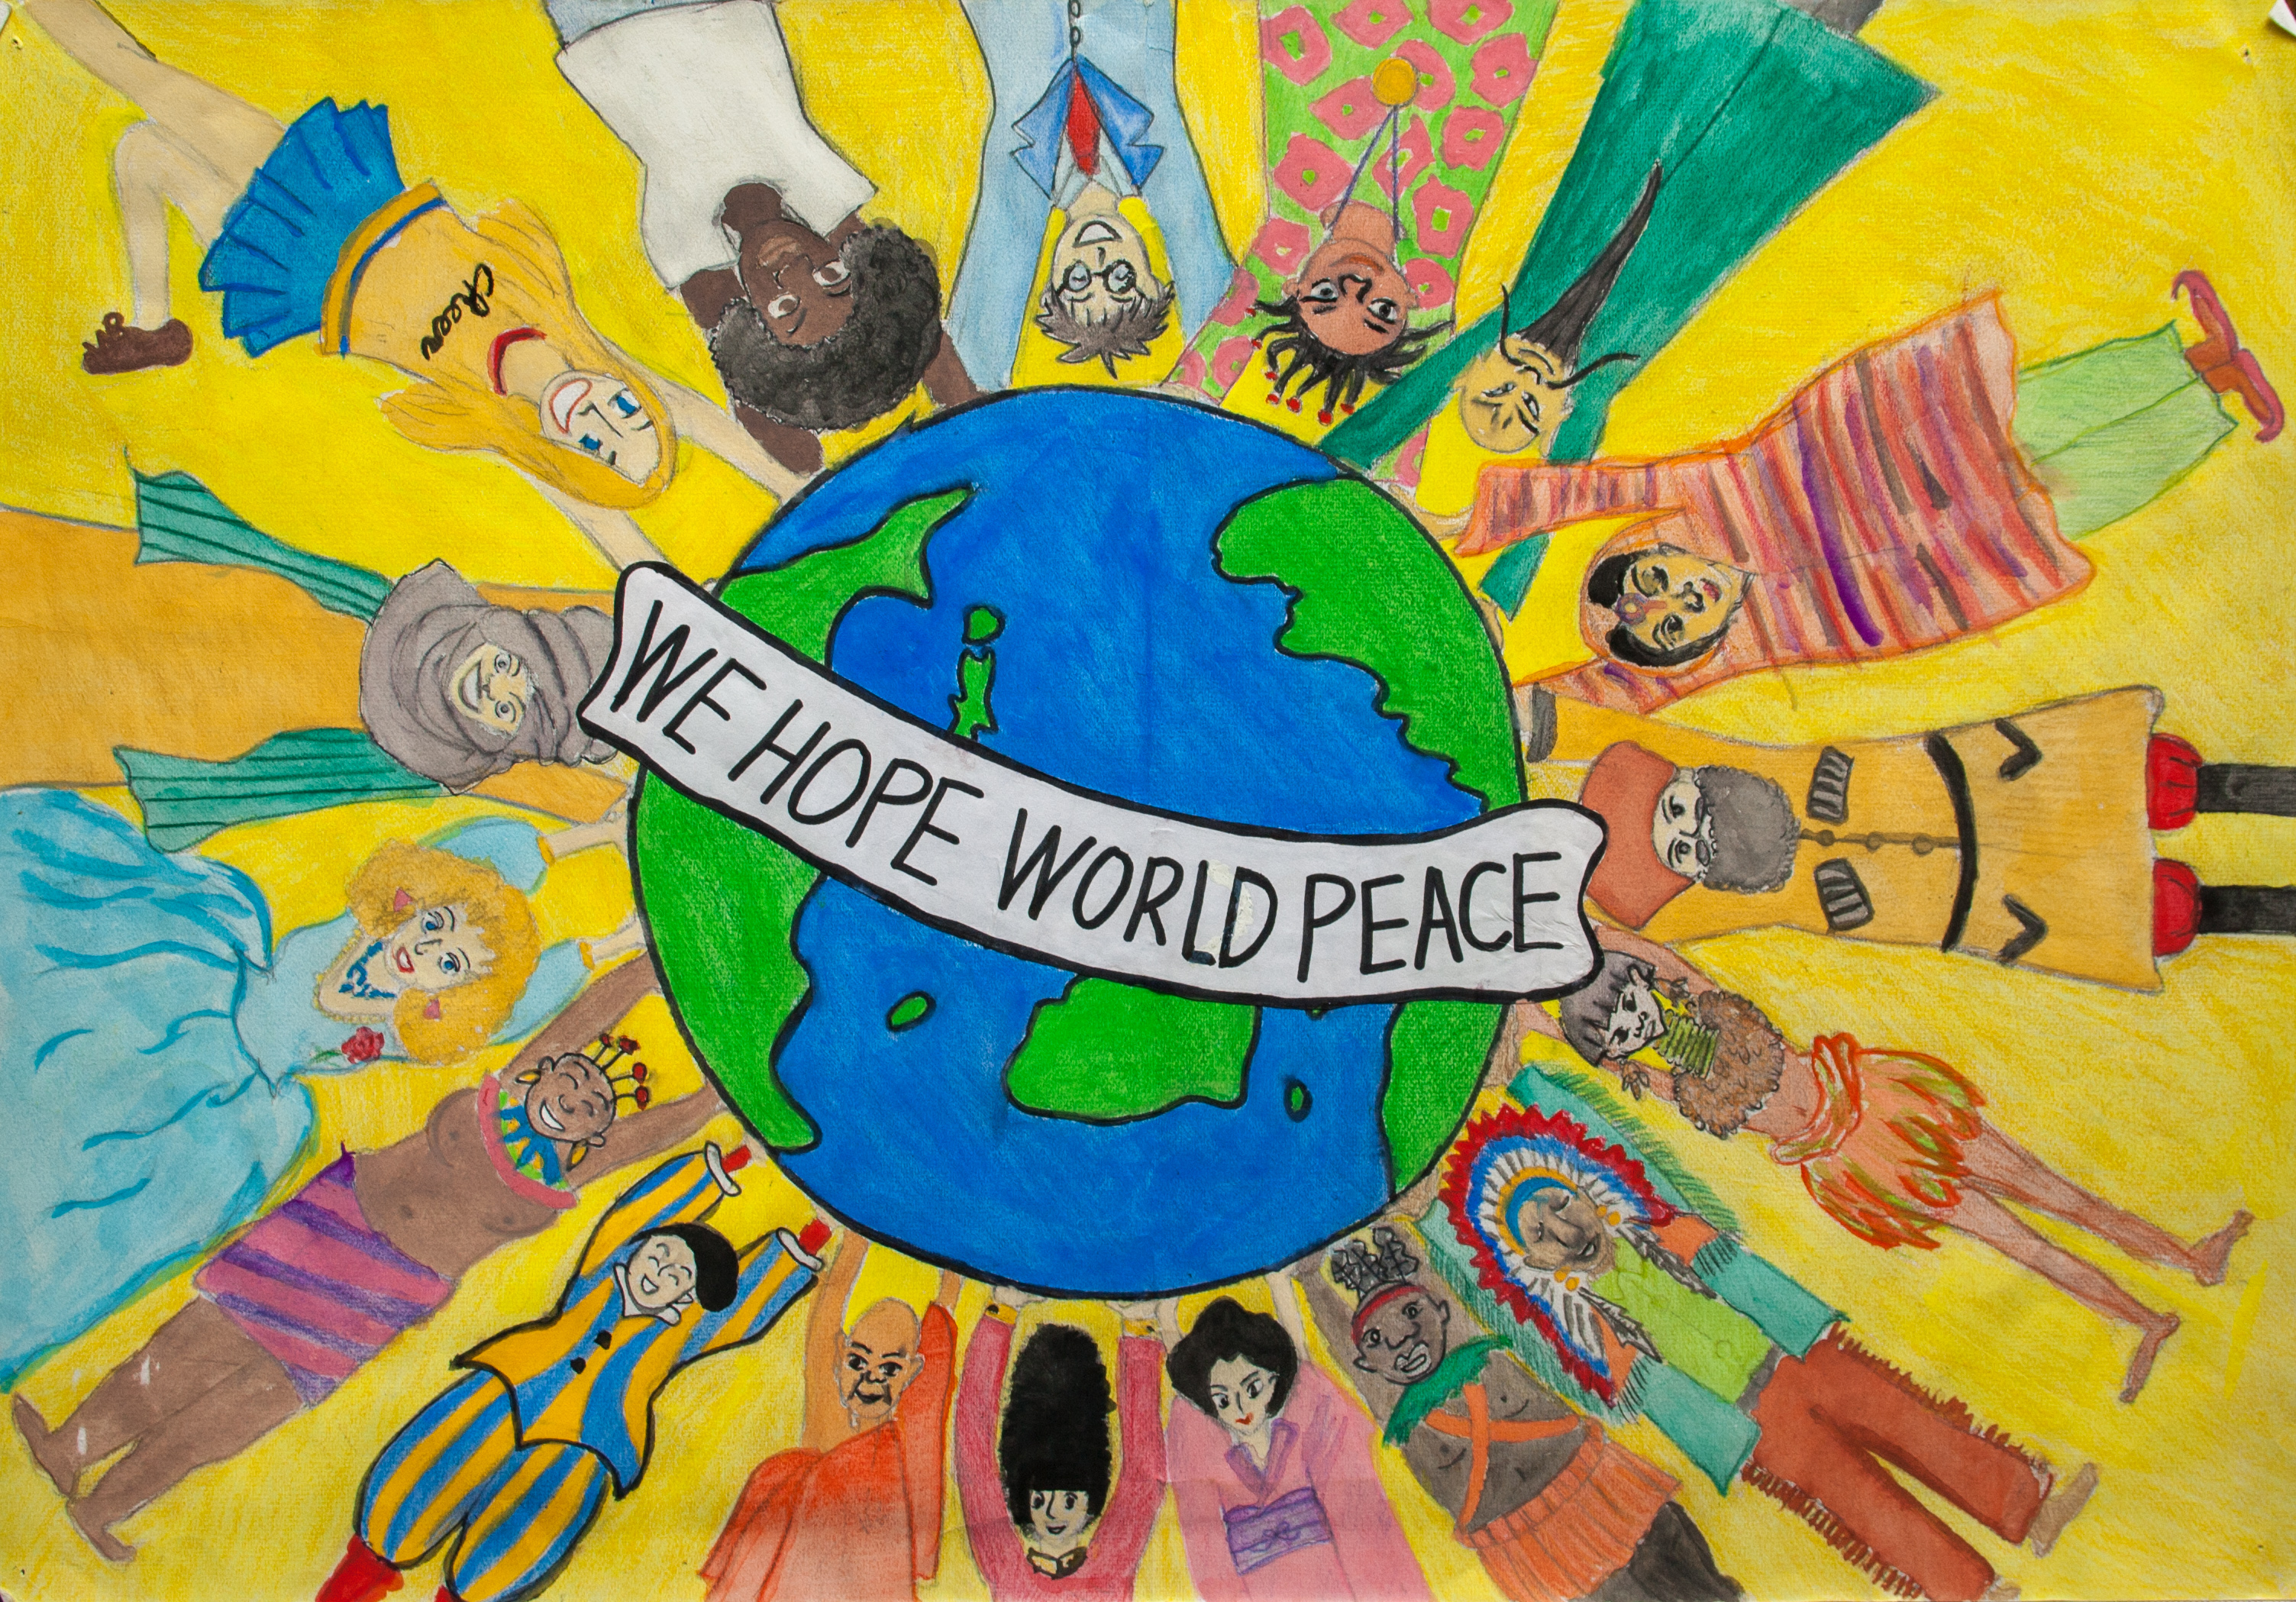 We hope world peace | Children Map Their World